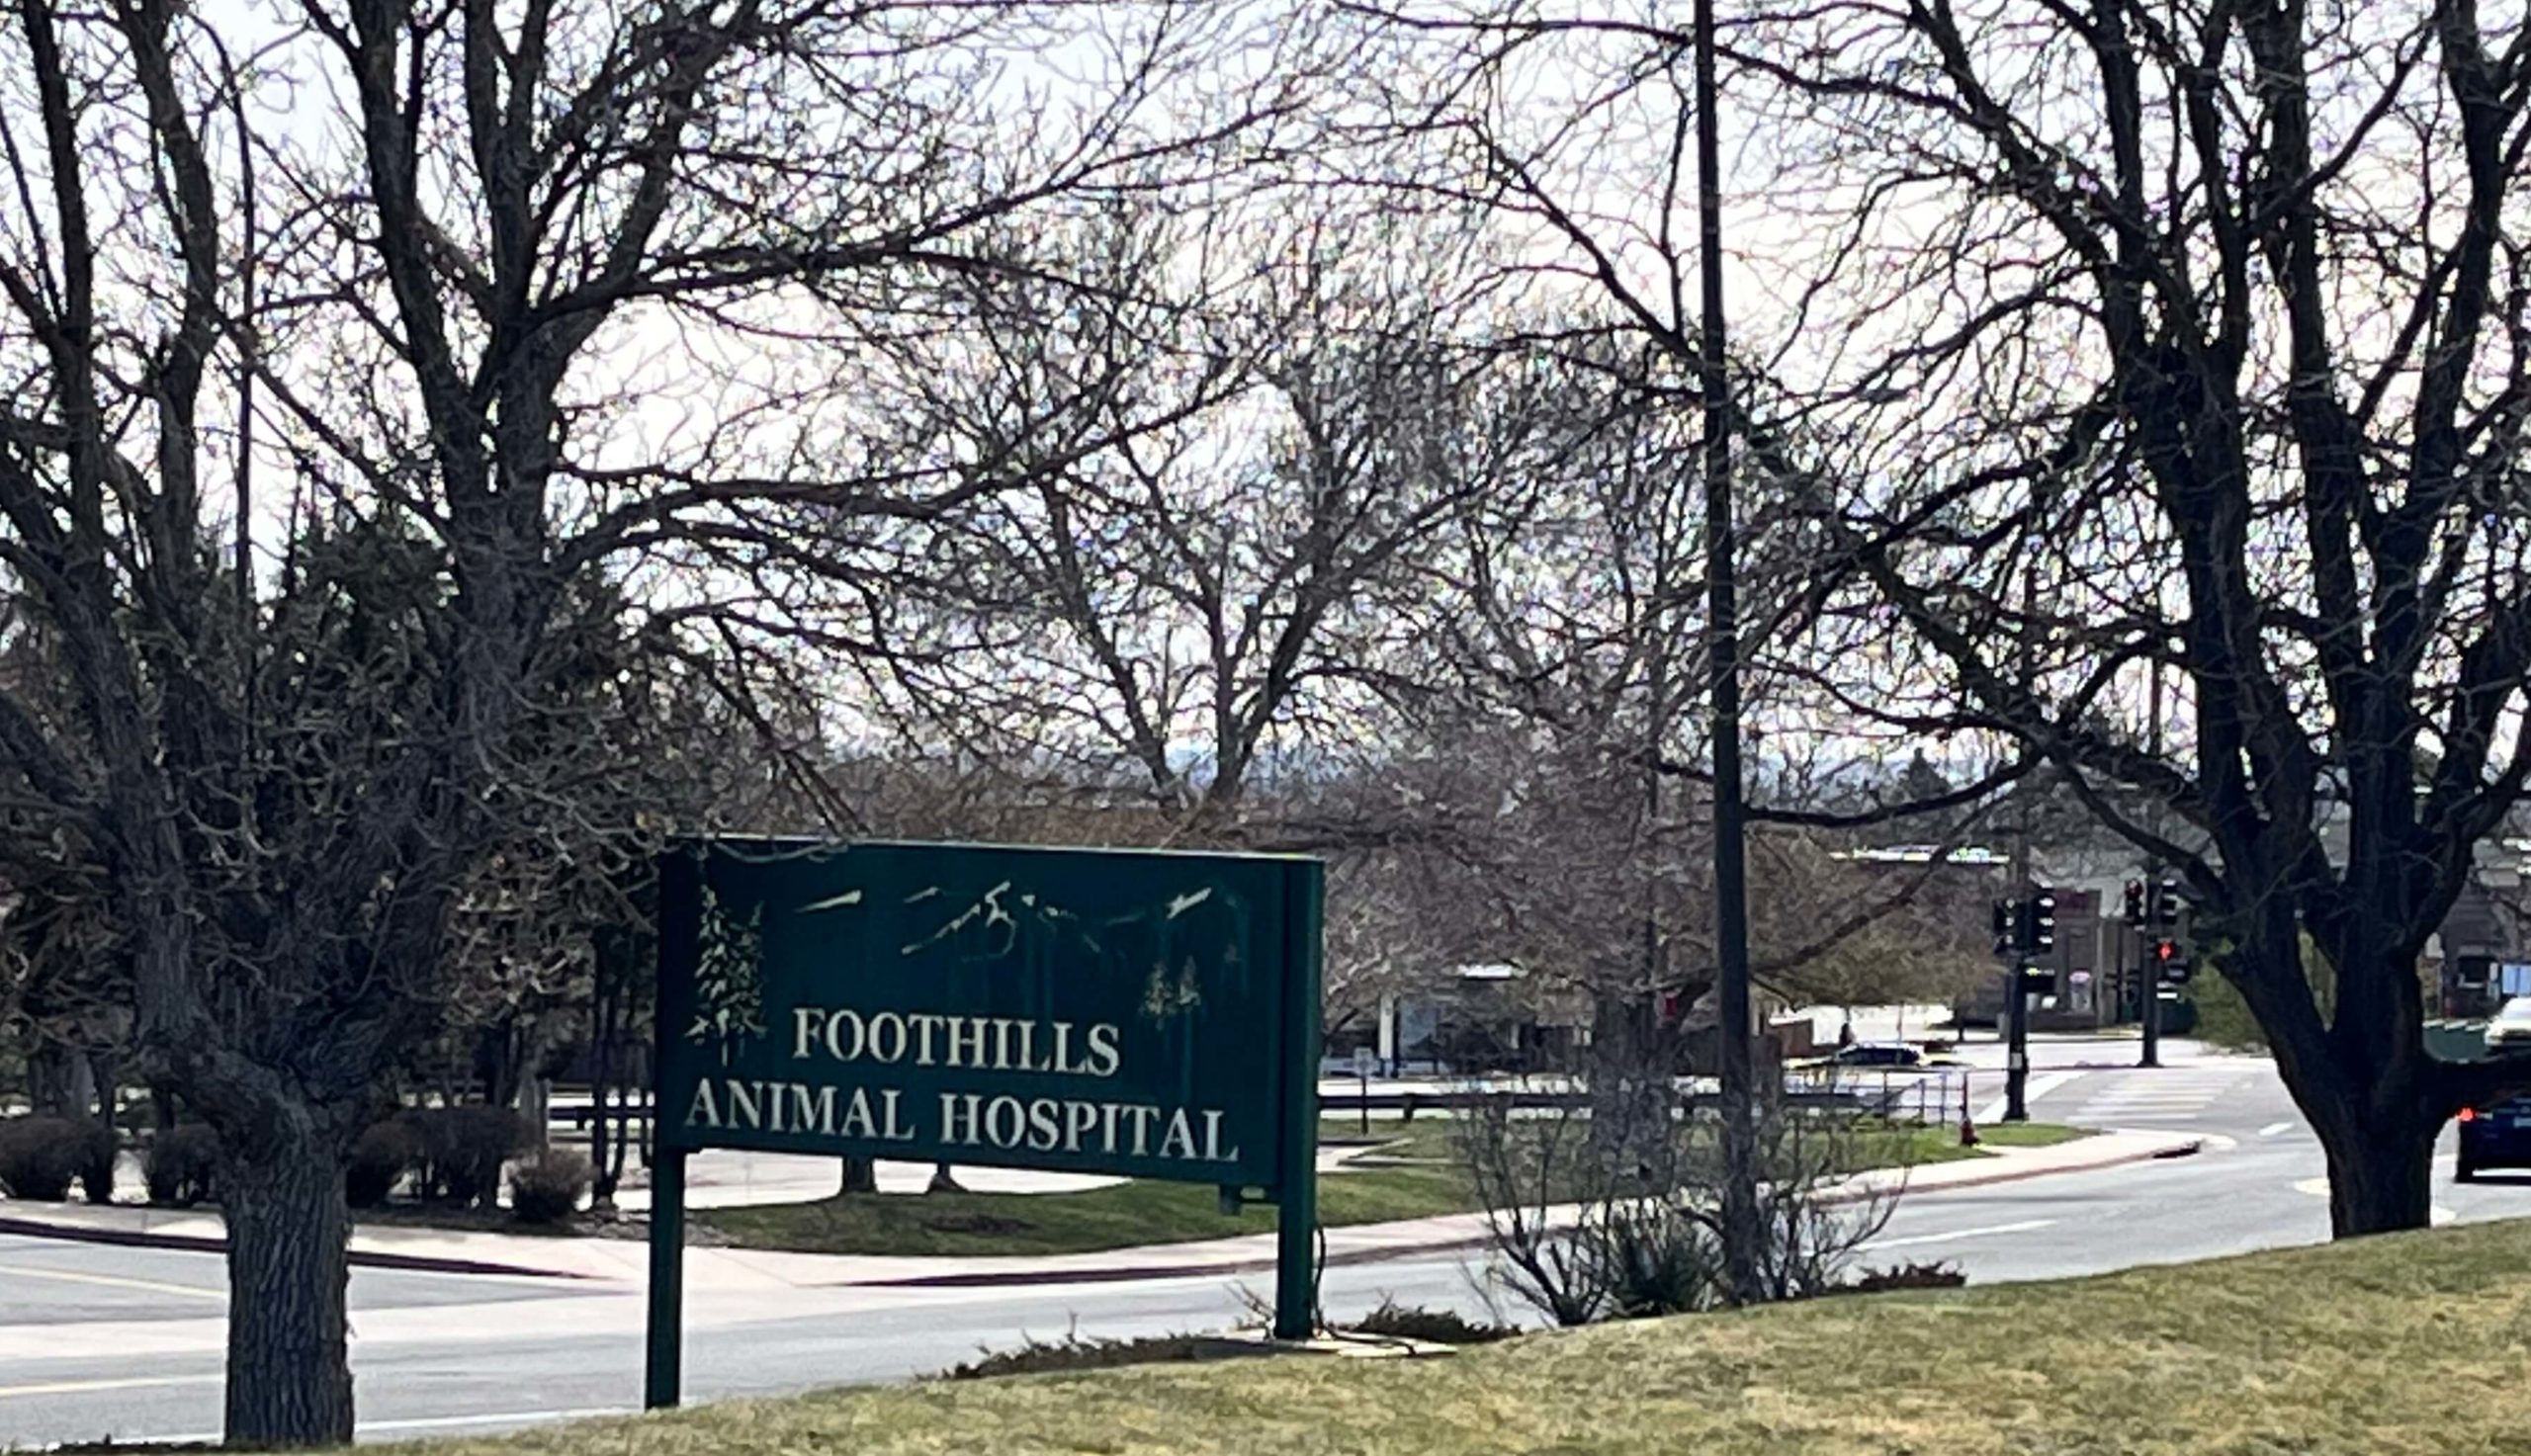 foothills animal hospital signage